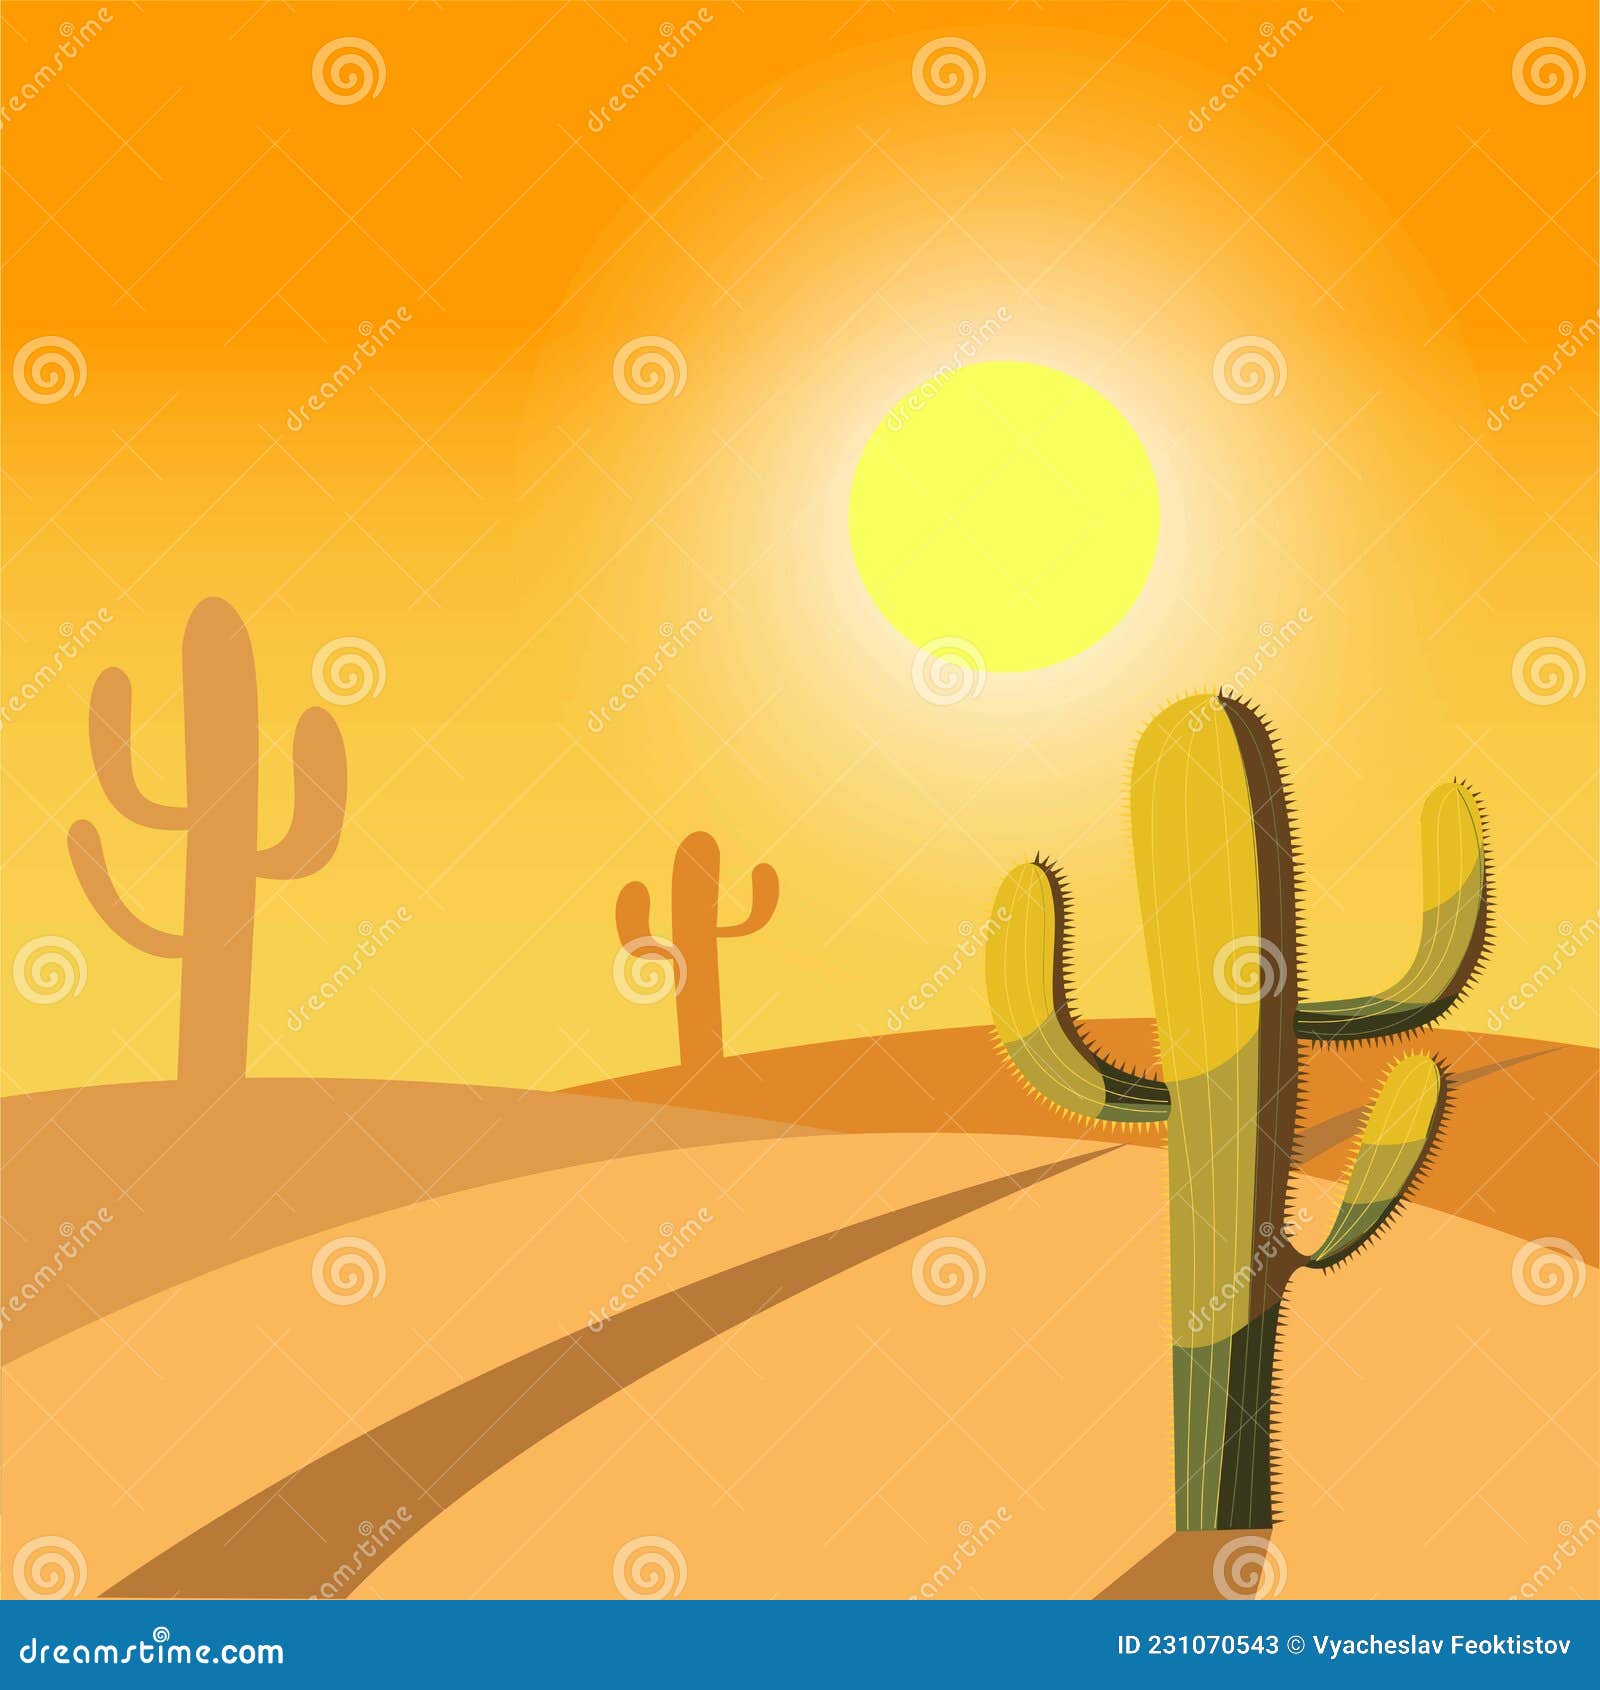 Desert Landscape with Cacti Stock Vector - Illustration of hills, cacti ...